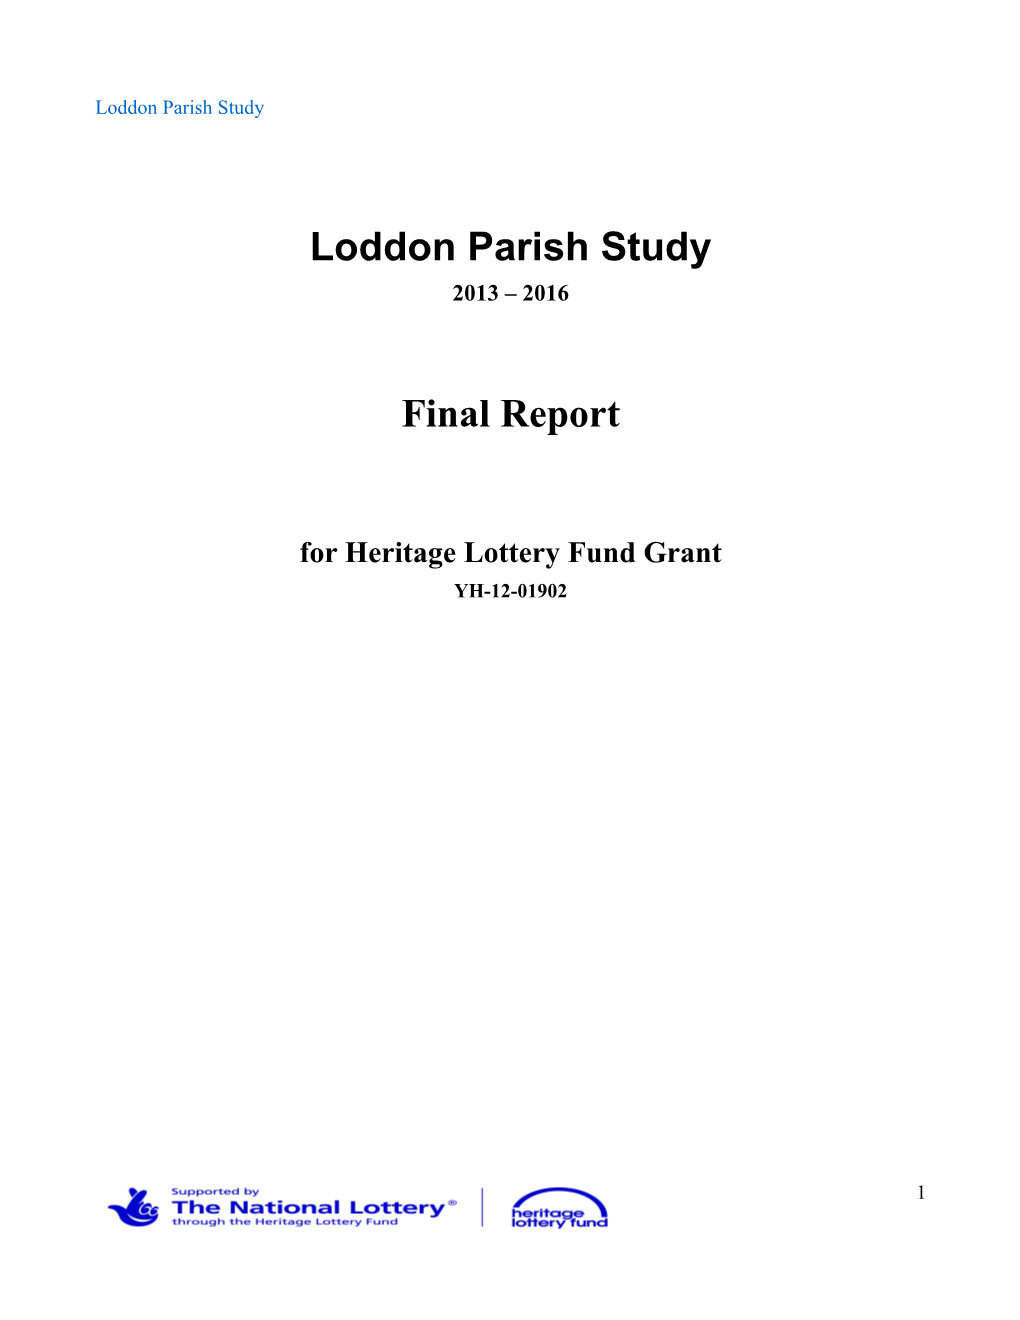 Parish Study Final Report